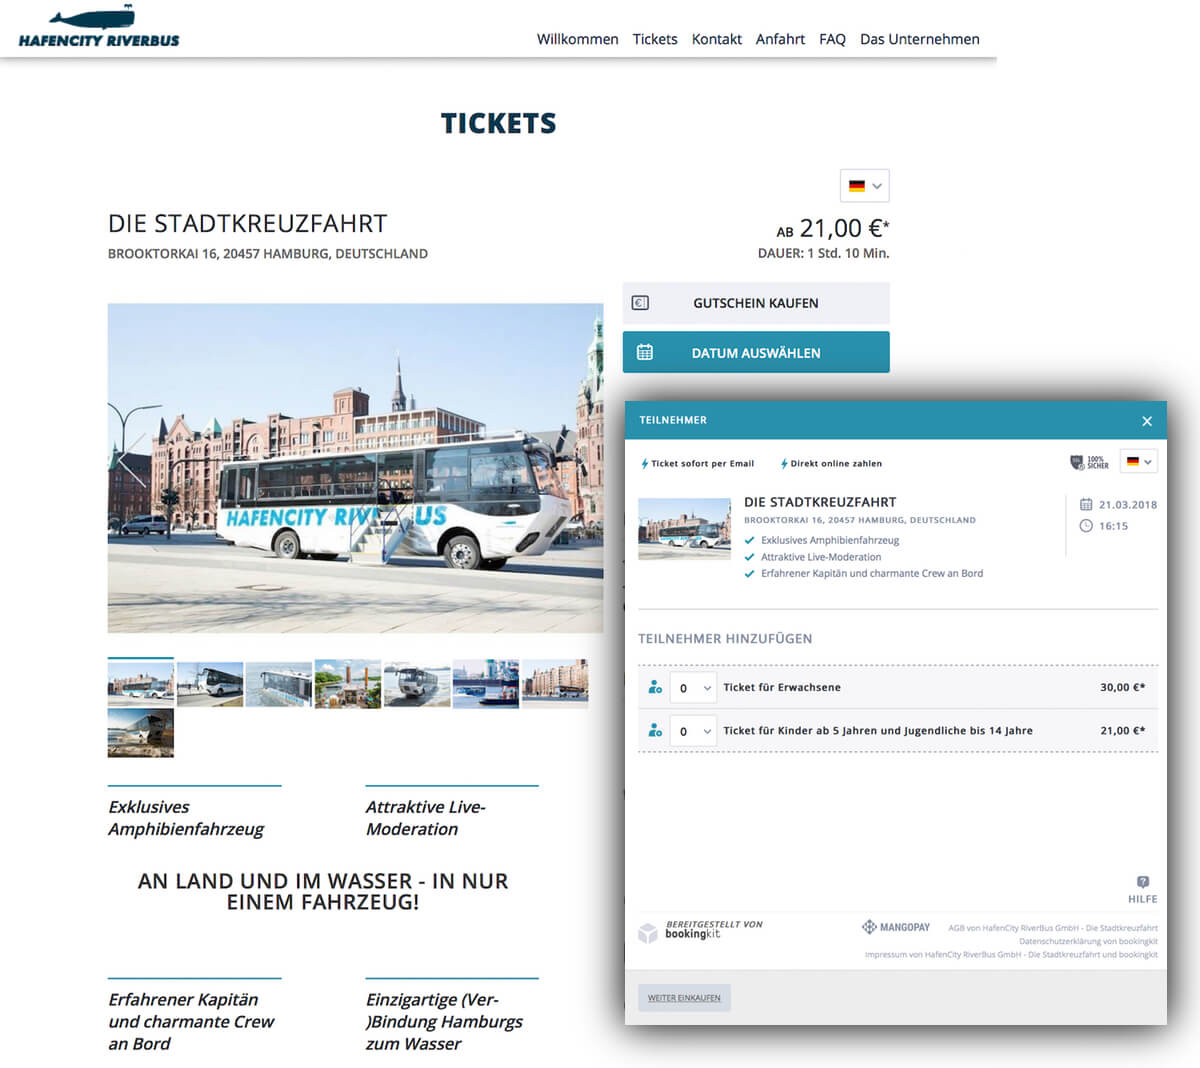 bookingkit-Widget-Checkout-2-Best-Practice-Hafencity-Riverbus